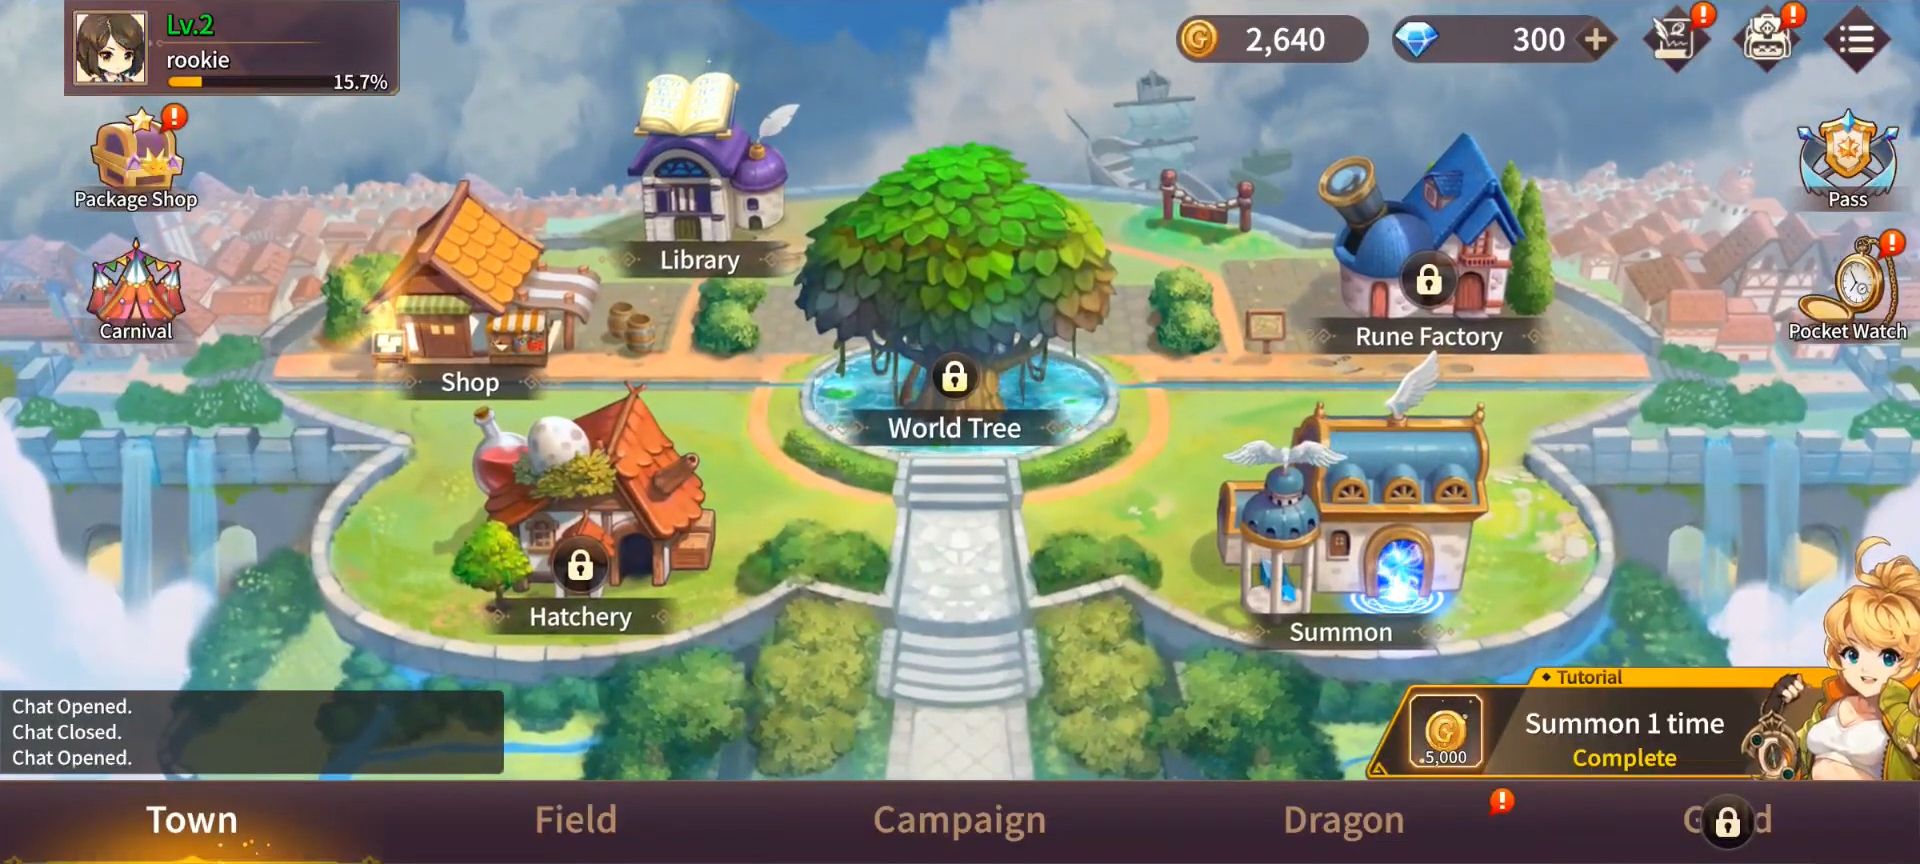 Dragon Village Grand Battle - Android game screenshots.